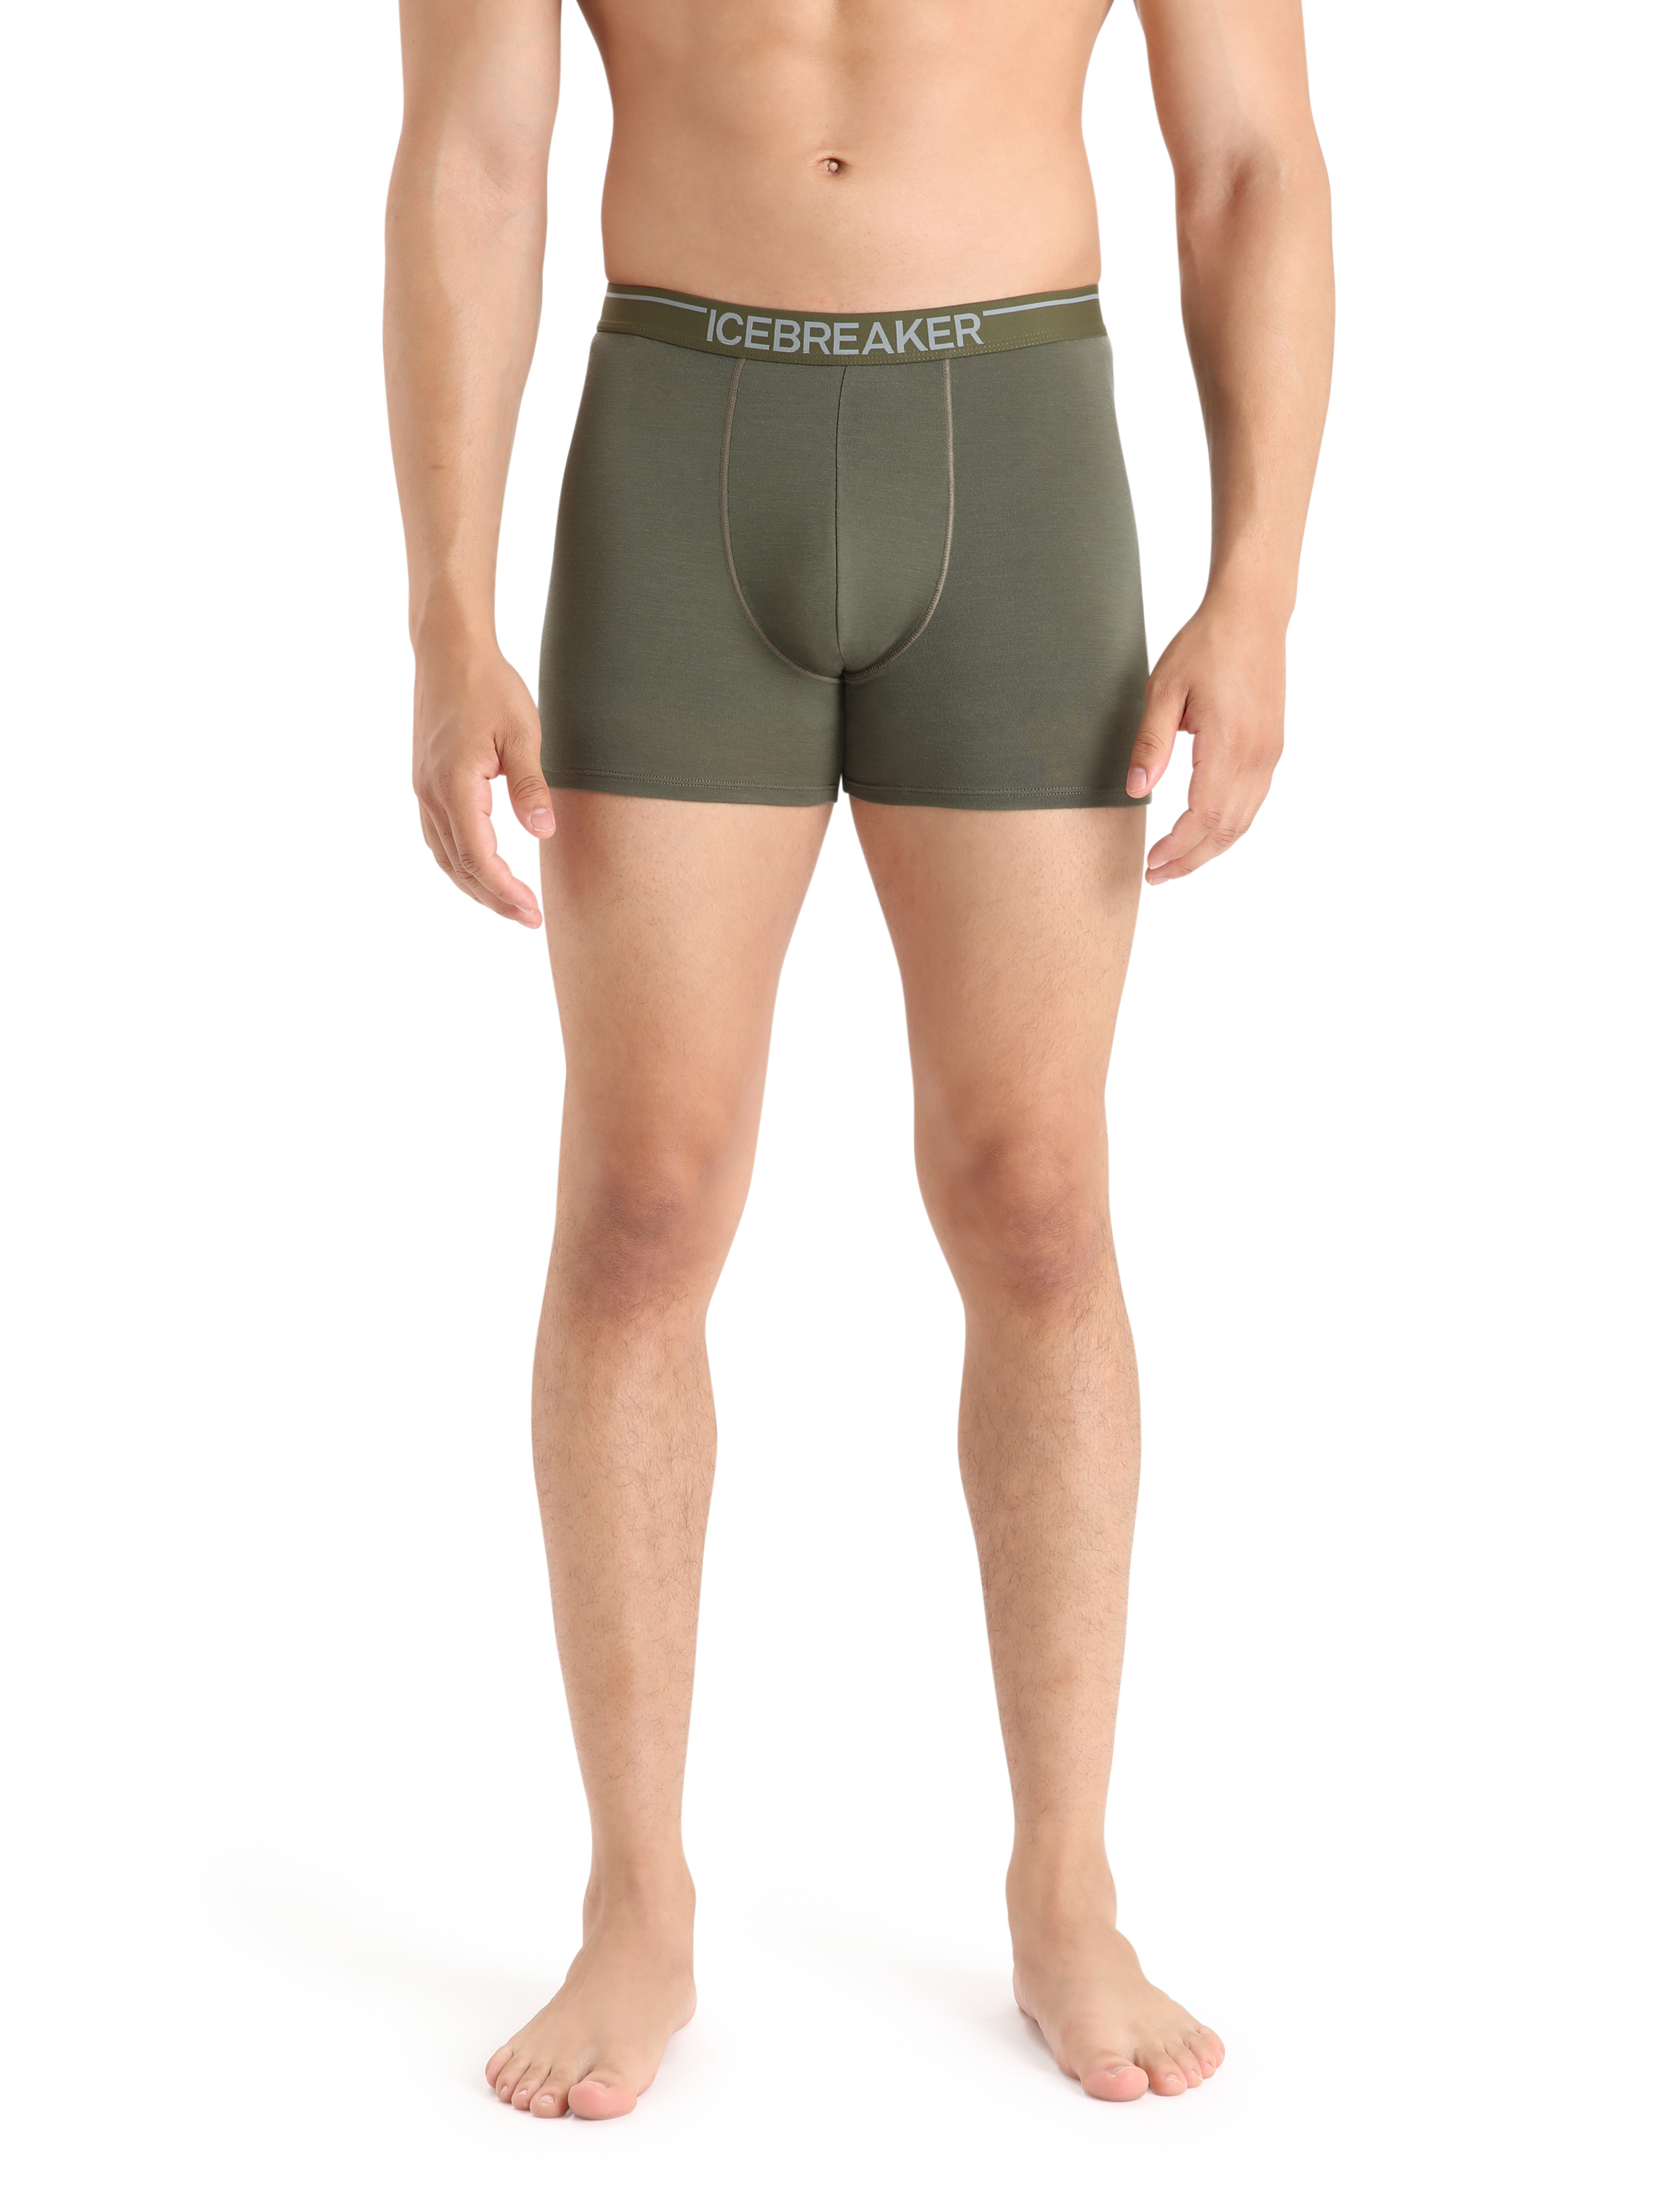 1/6 Scale Men's Underpants Briefs For 12 Male Action Figure Accessory